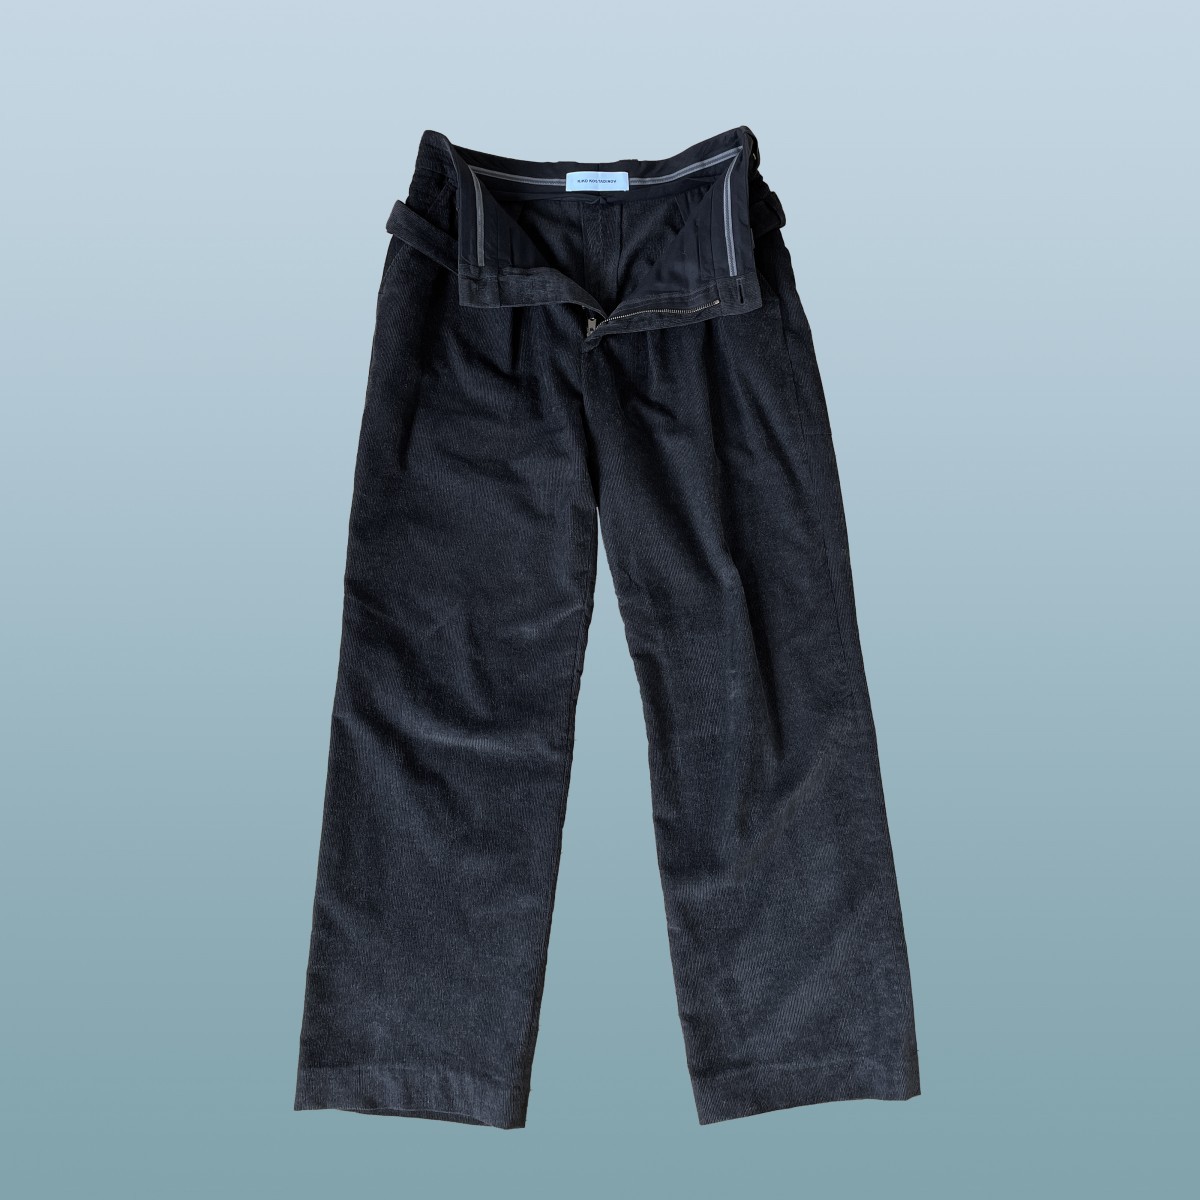 Yann Treated Corduroy pants (FW18) - 2